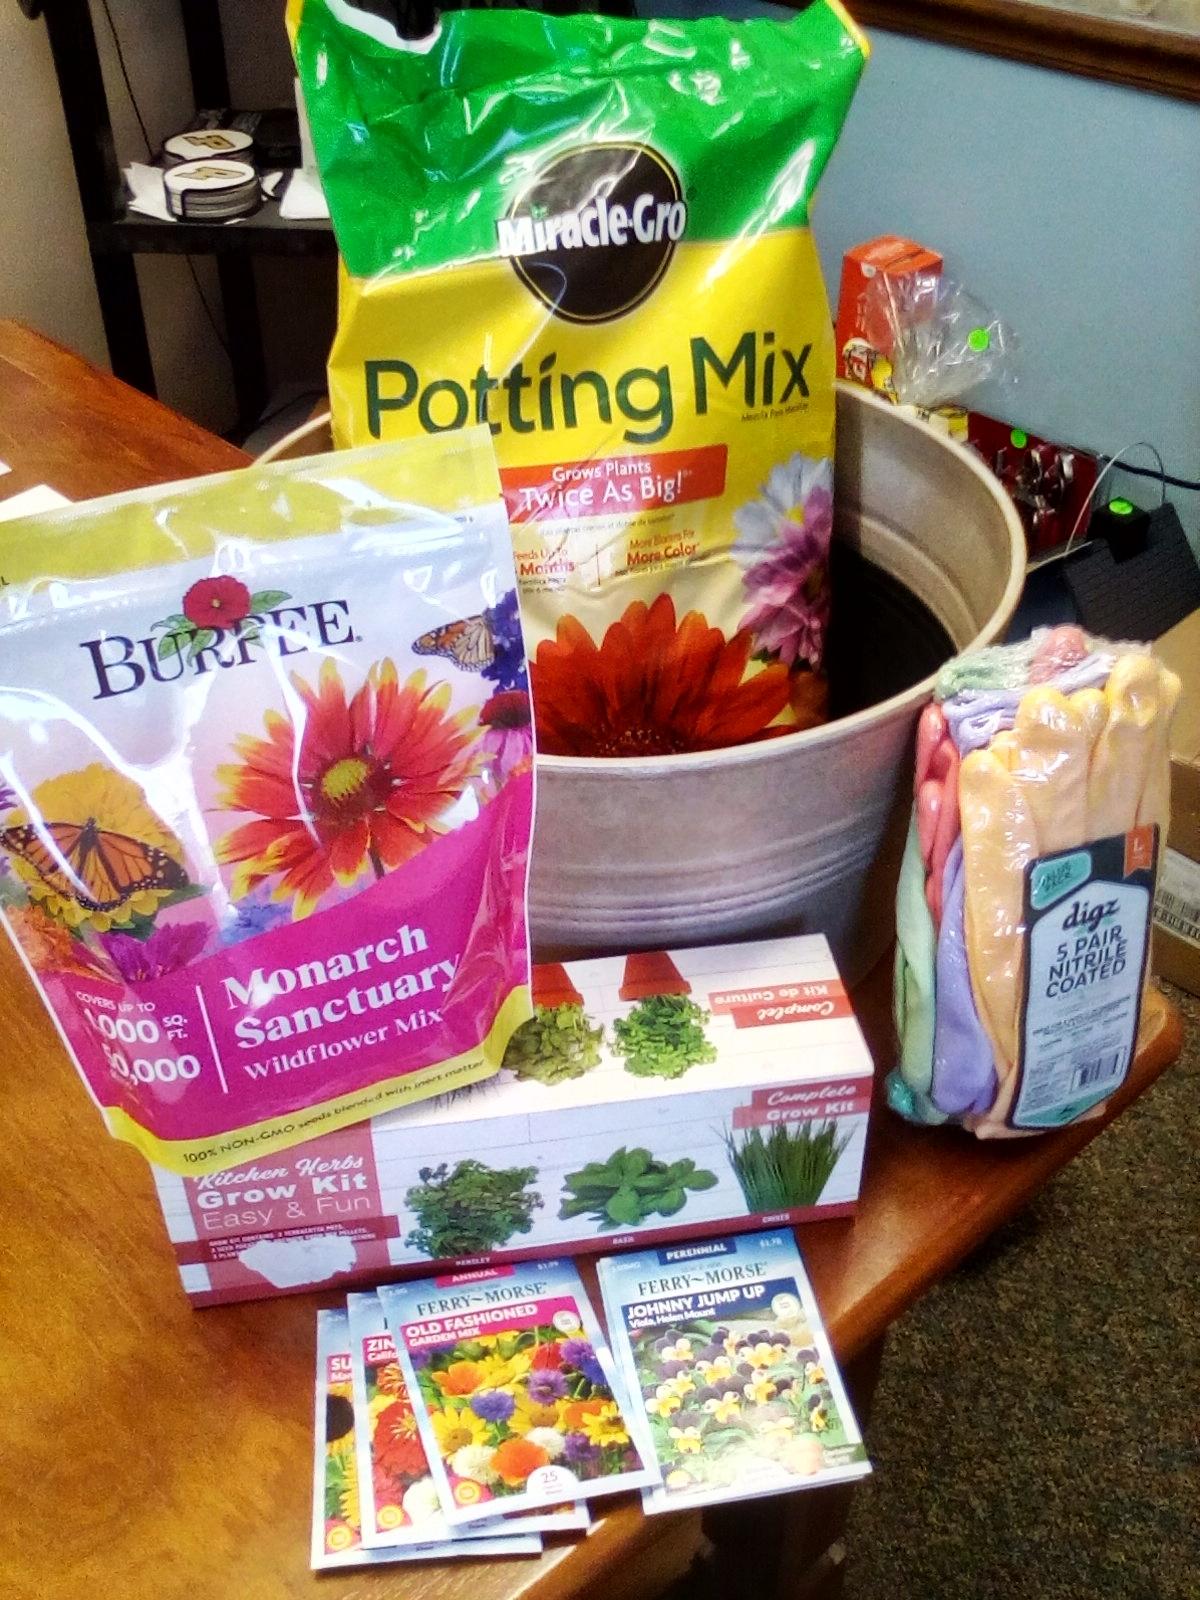 Gardening Planter full of potting soil, herb kits, flower seeds, and more